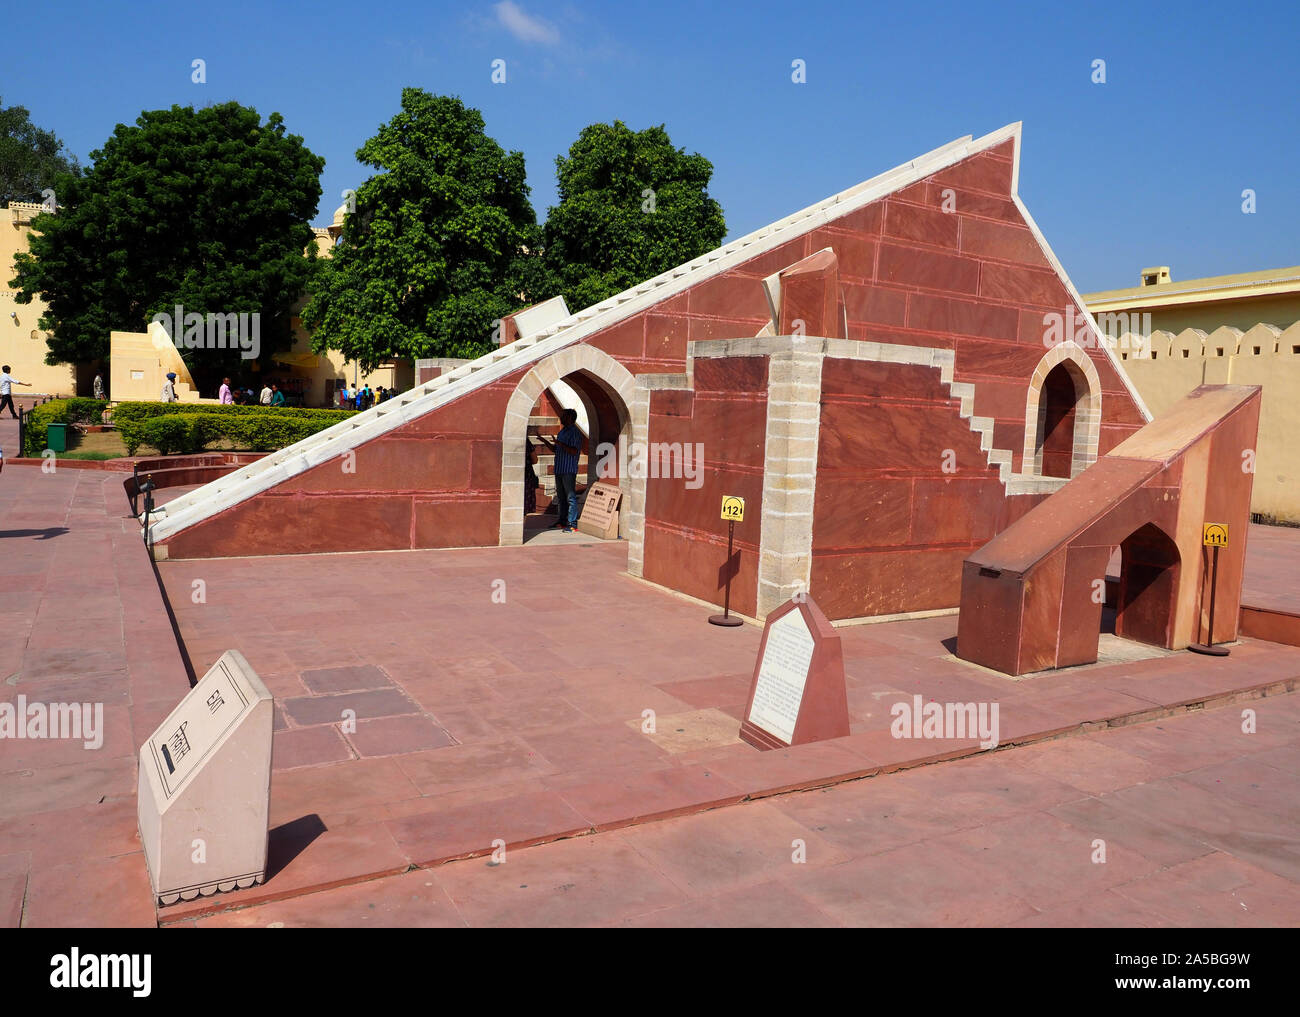 El Jantar Mantar, un observatorio astronómico de Jaipur, Rajasthan, India. Foto de stock